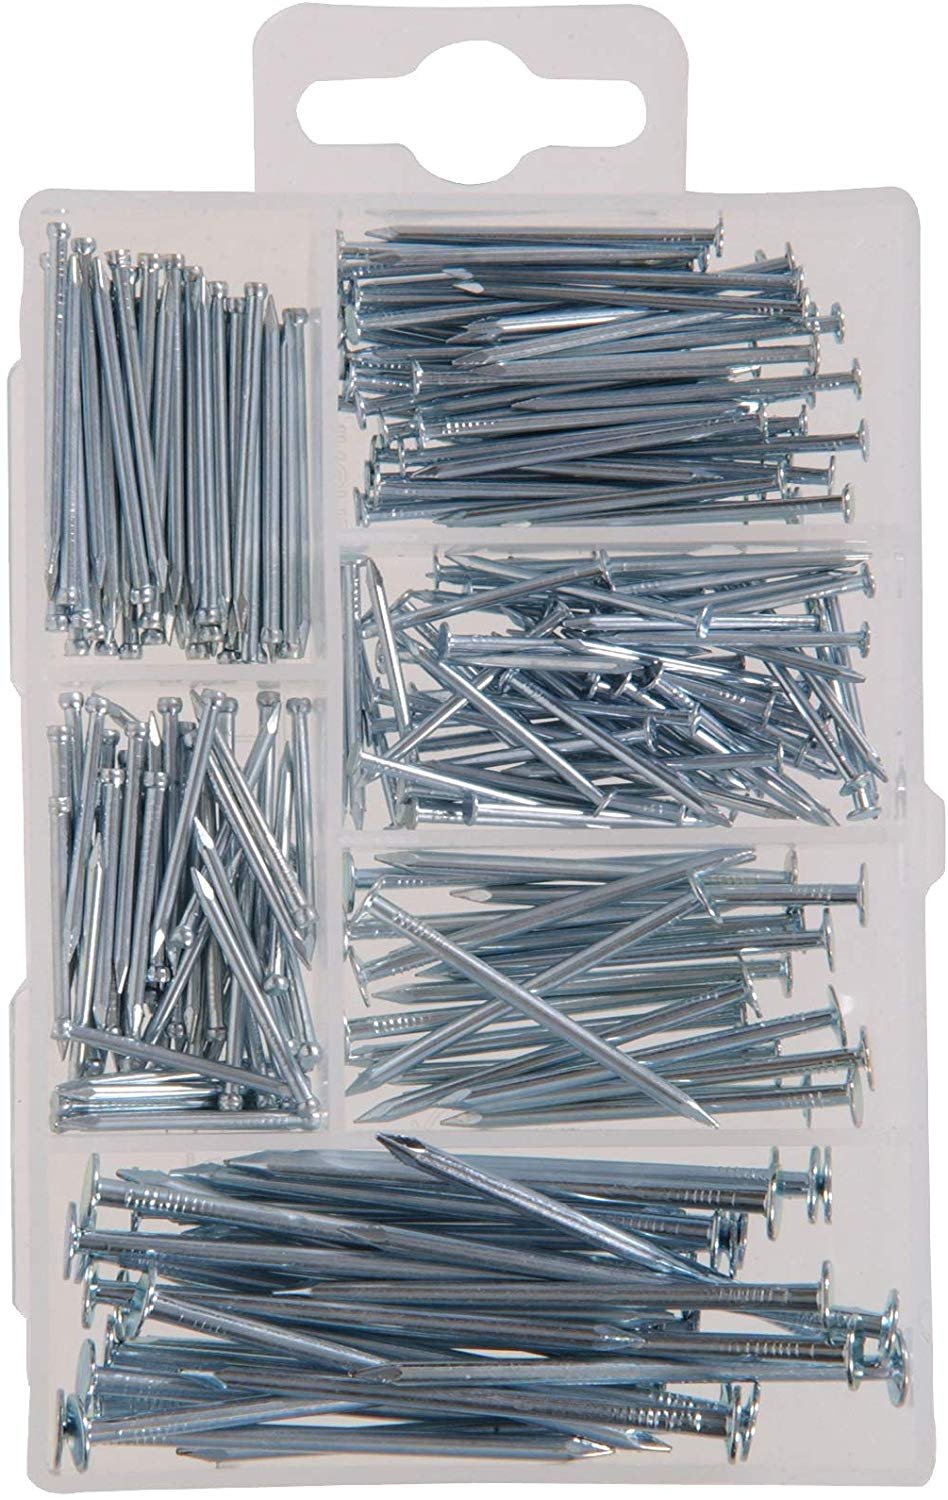 HILLMAN FASTENER 130207 Kit Wire Nails and Brads, Silver, 266 Piece